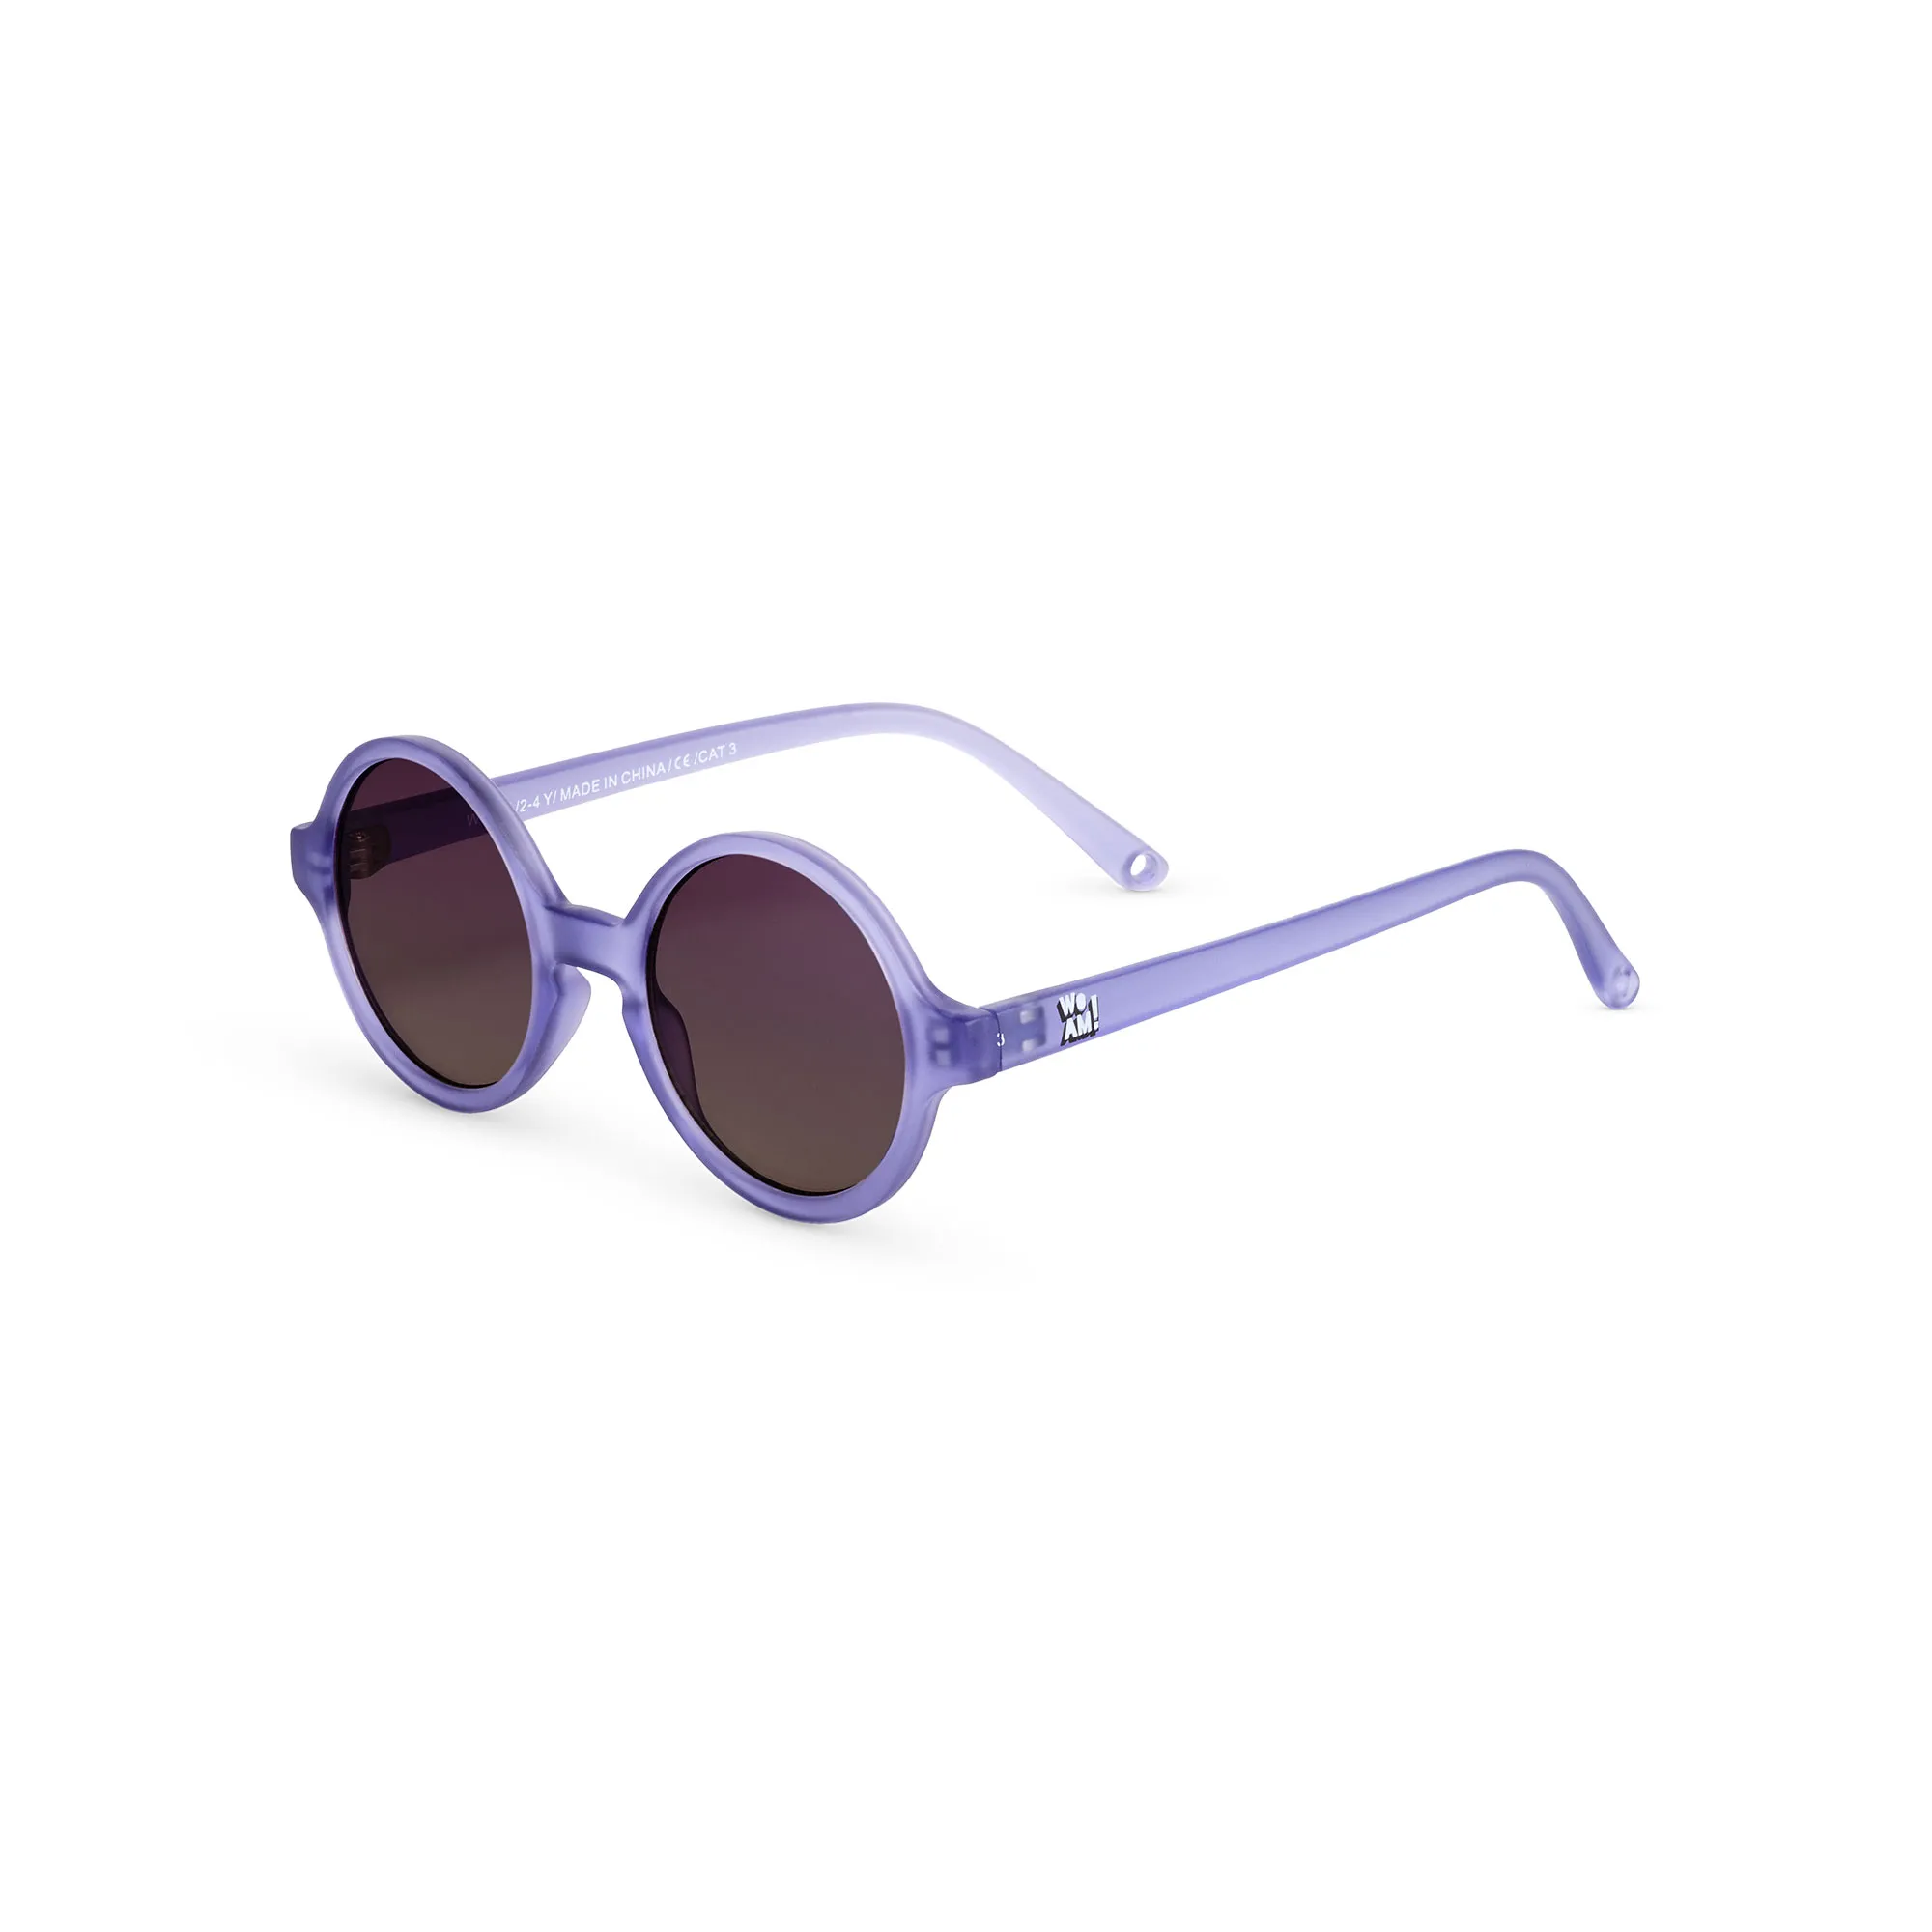 WOAM slnečné okuliare 0-2 roky - Purple 1×1 ks, detské slnečné okuliare